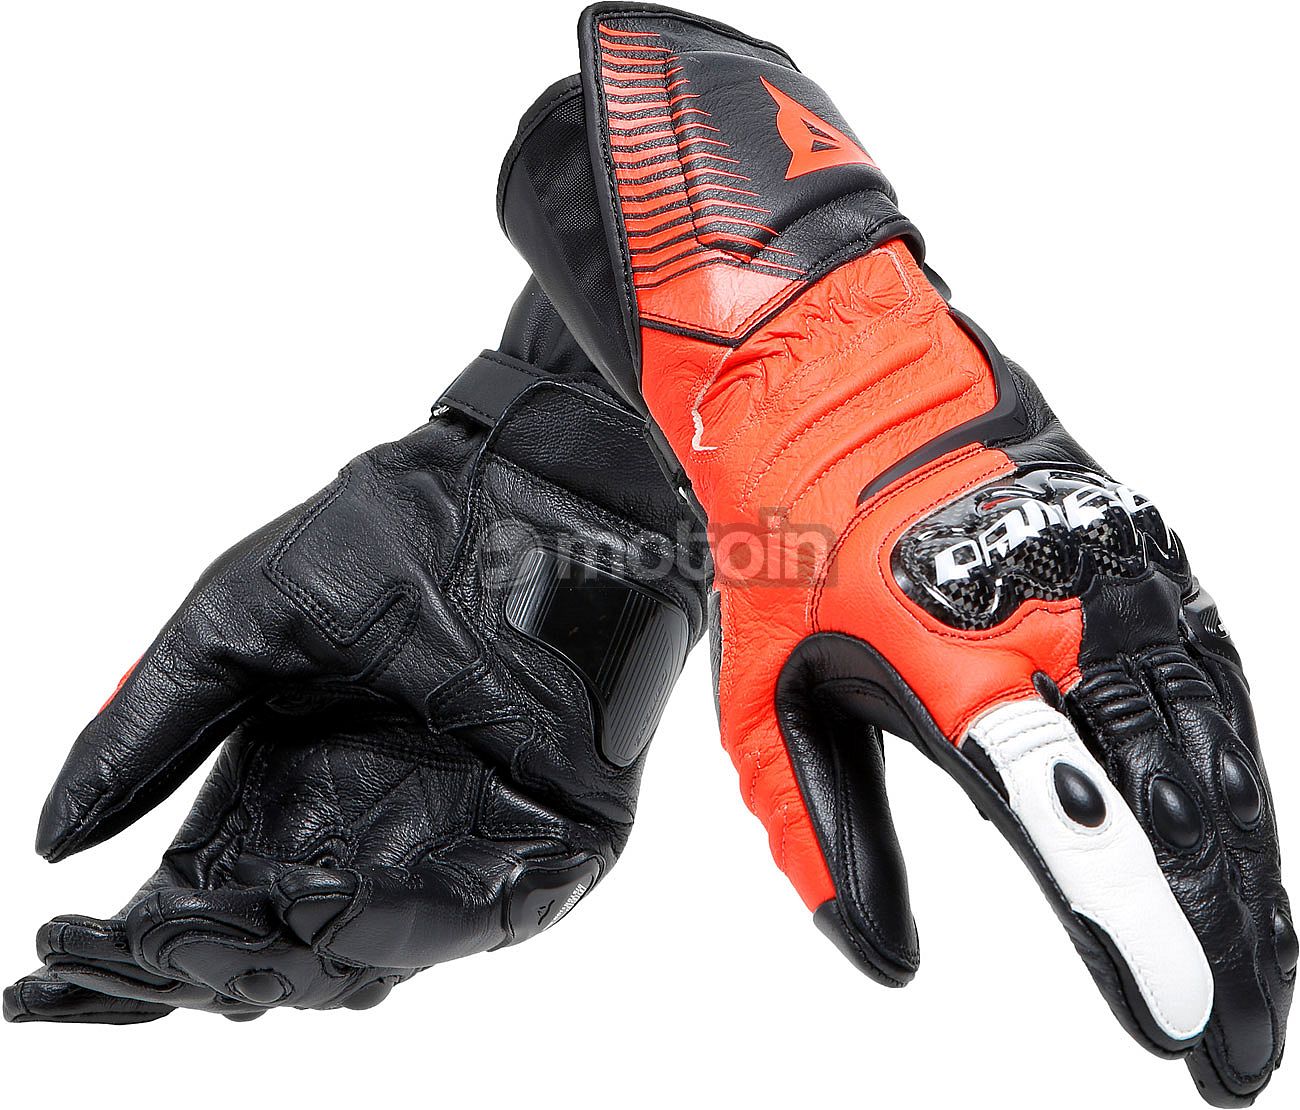 Dainese Carbon 4, gants longs